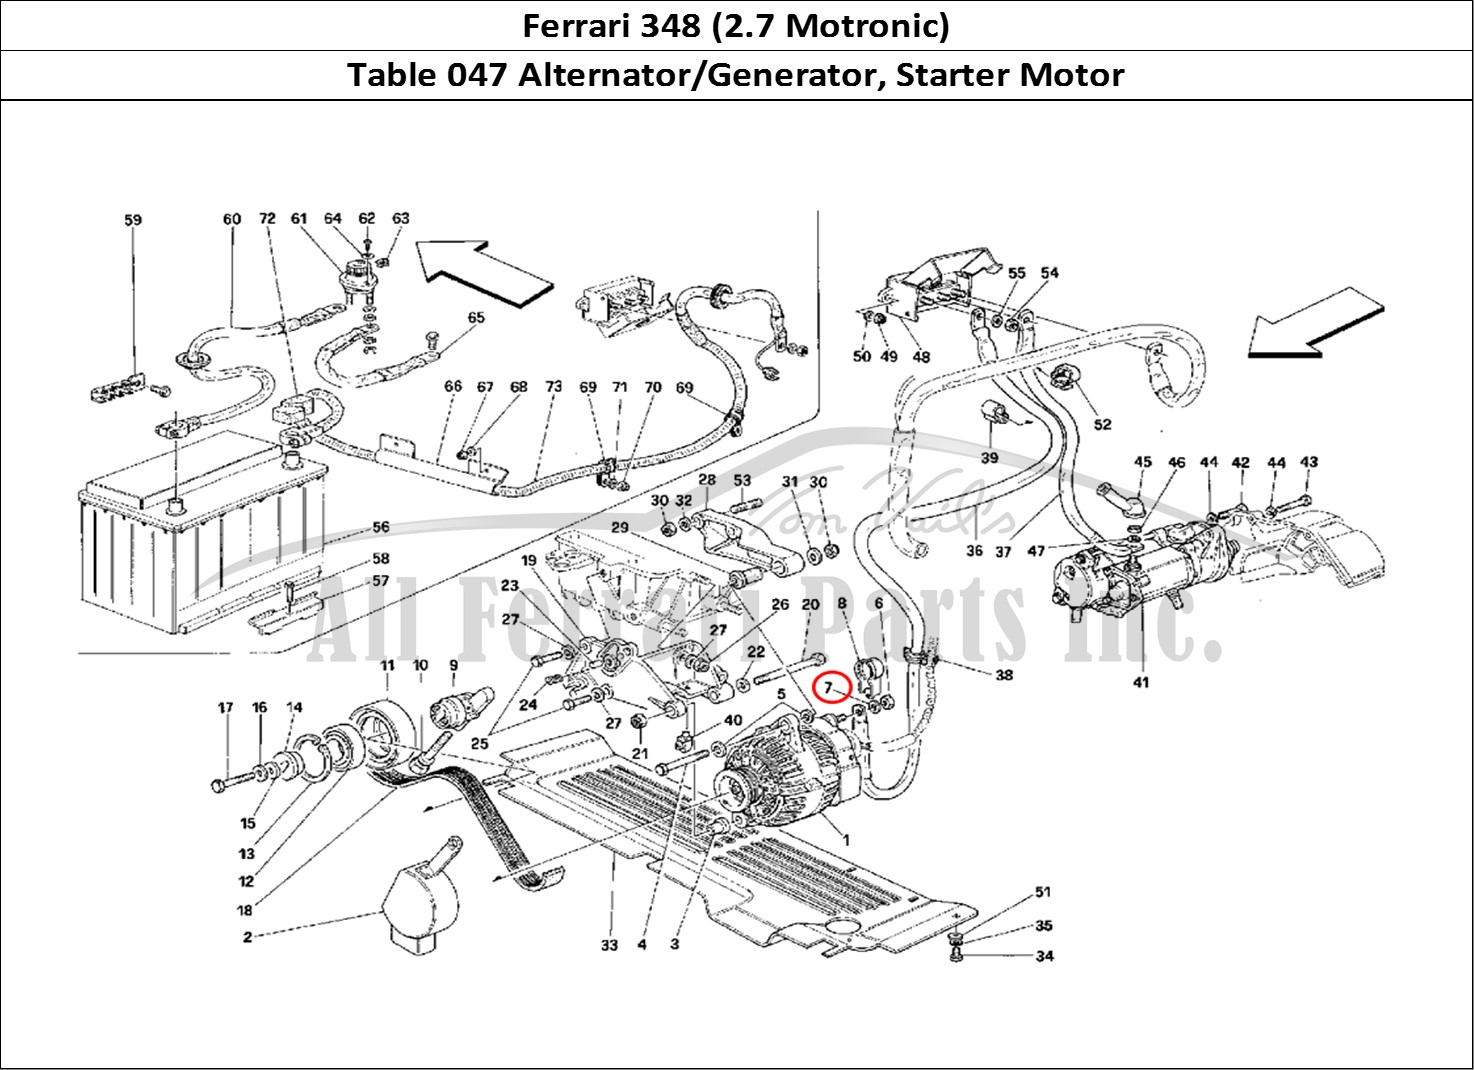 Ferrari Parts Ferrari 348 (2.7 Motronic) Page 047 Current Generator - Start